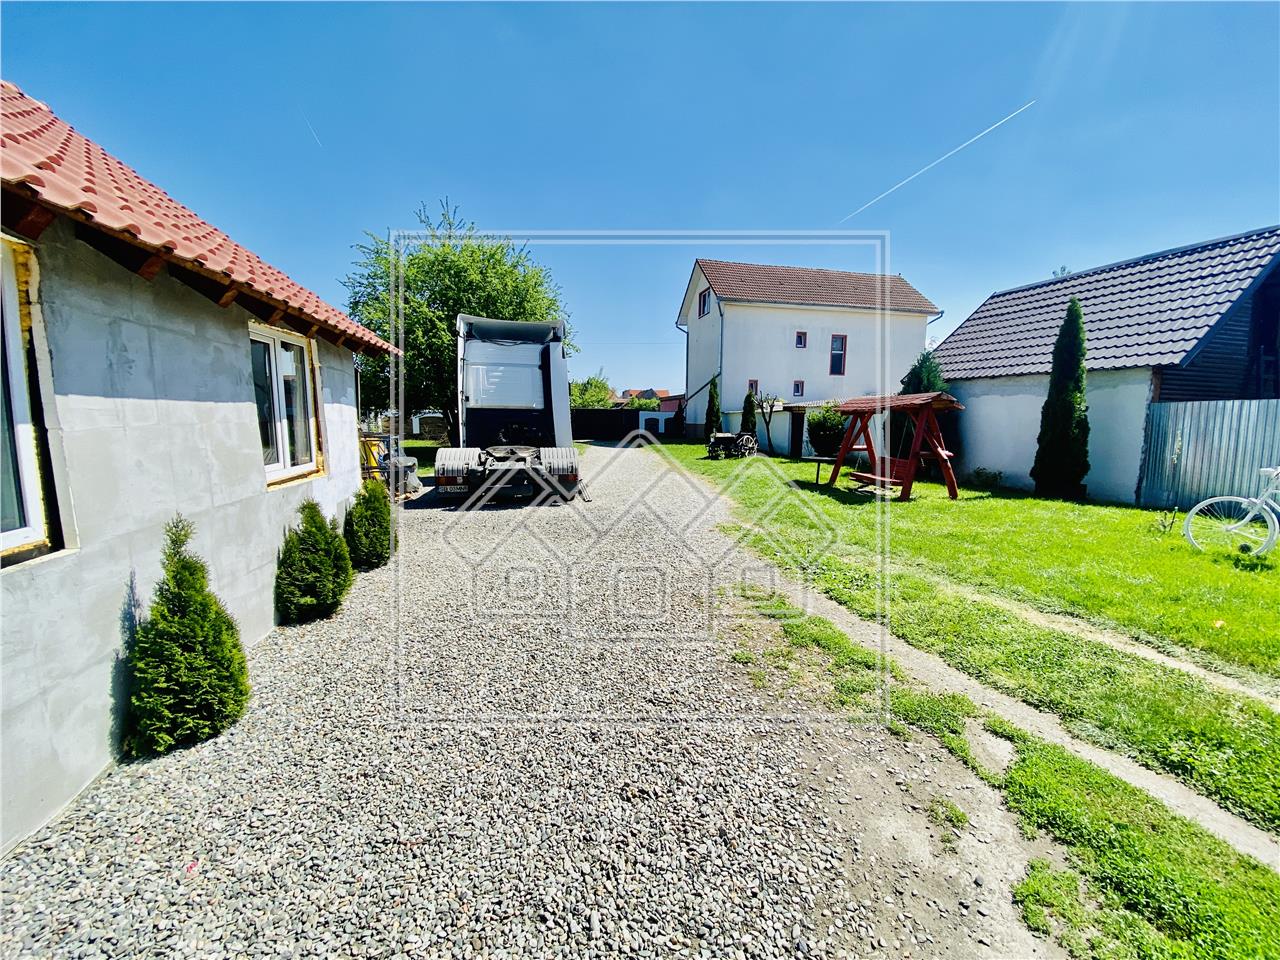 Casa de vanzare in Sibiu - individuala - curte libera 980 mp